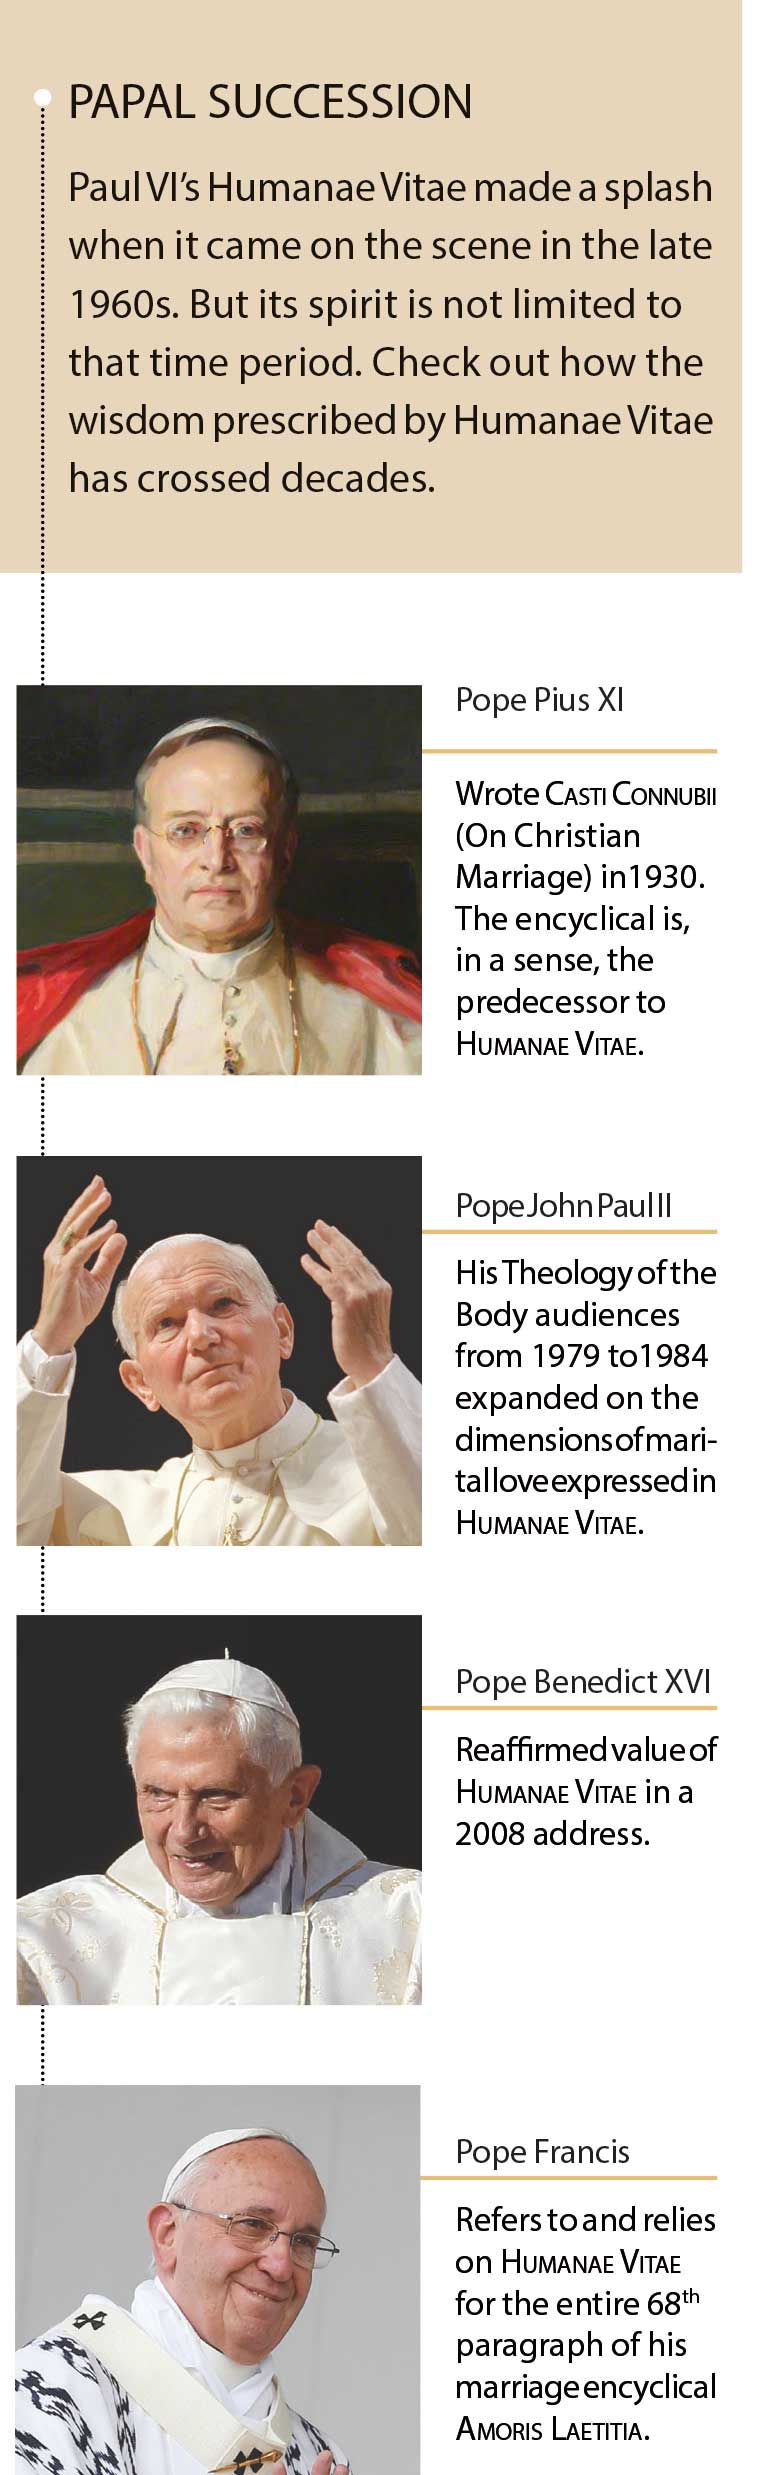 Succession of Popes.